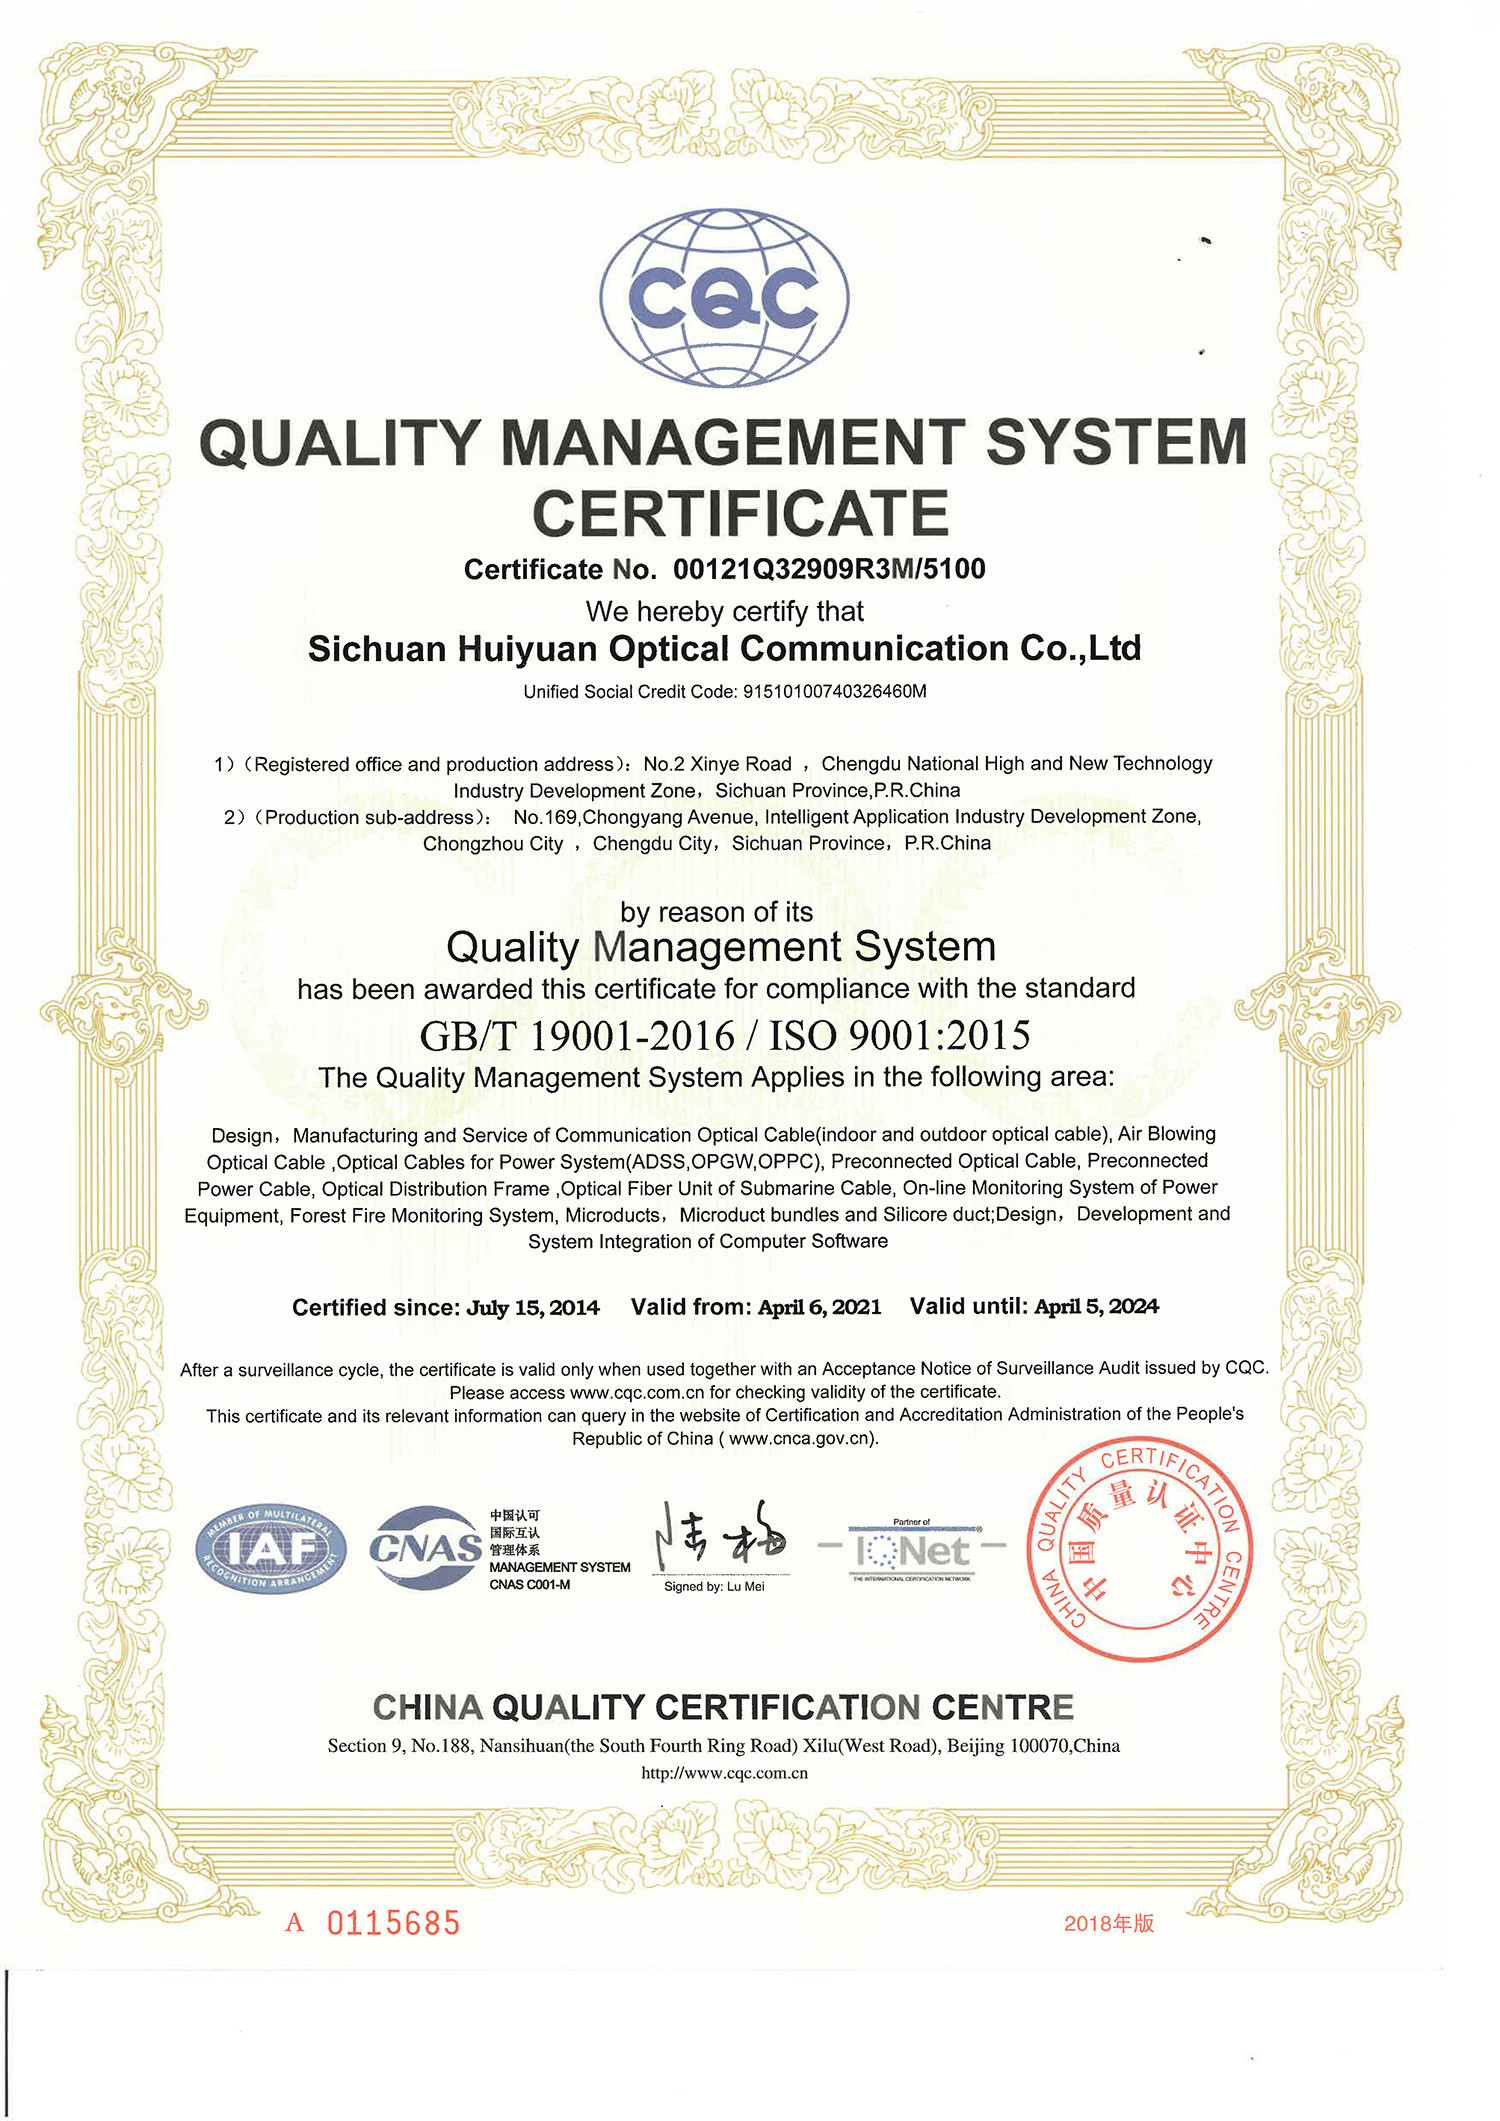 Sichuan Huiyuan Optical Communications Co., Ltd, Certifications